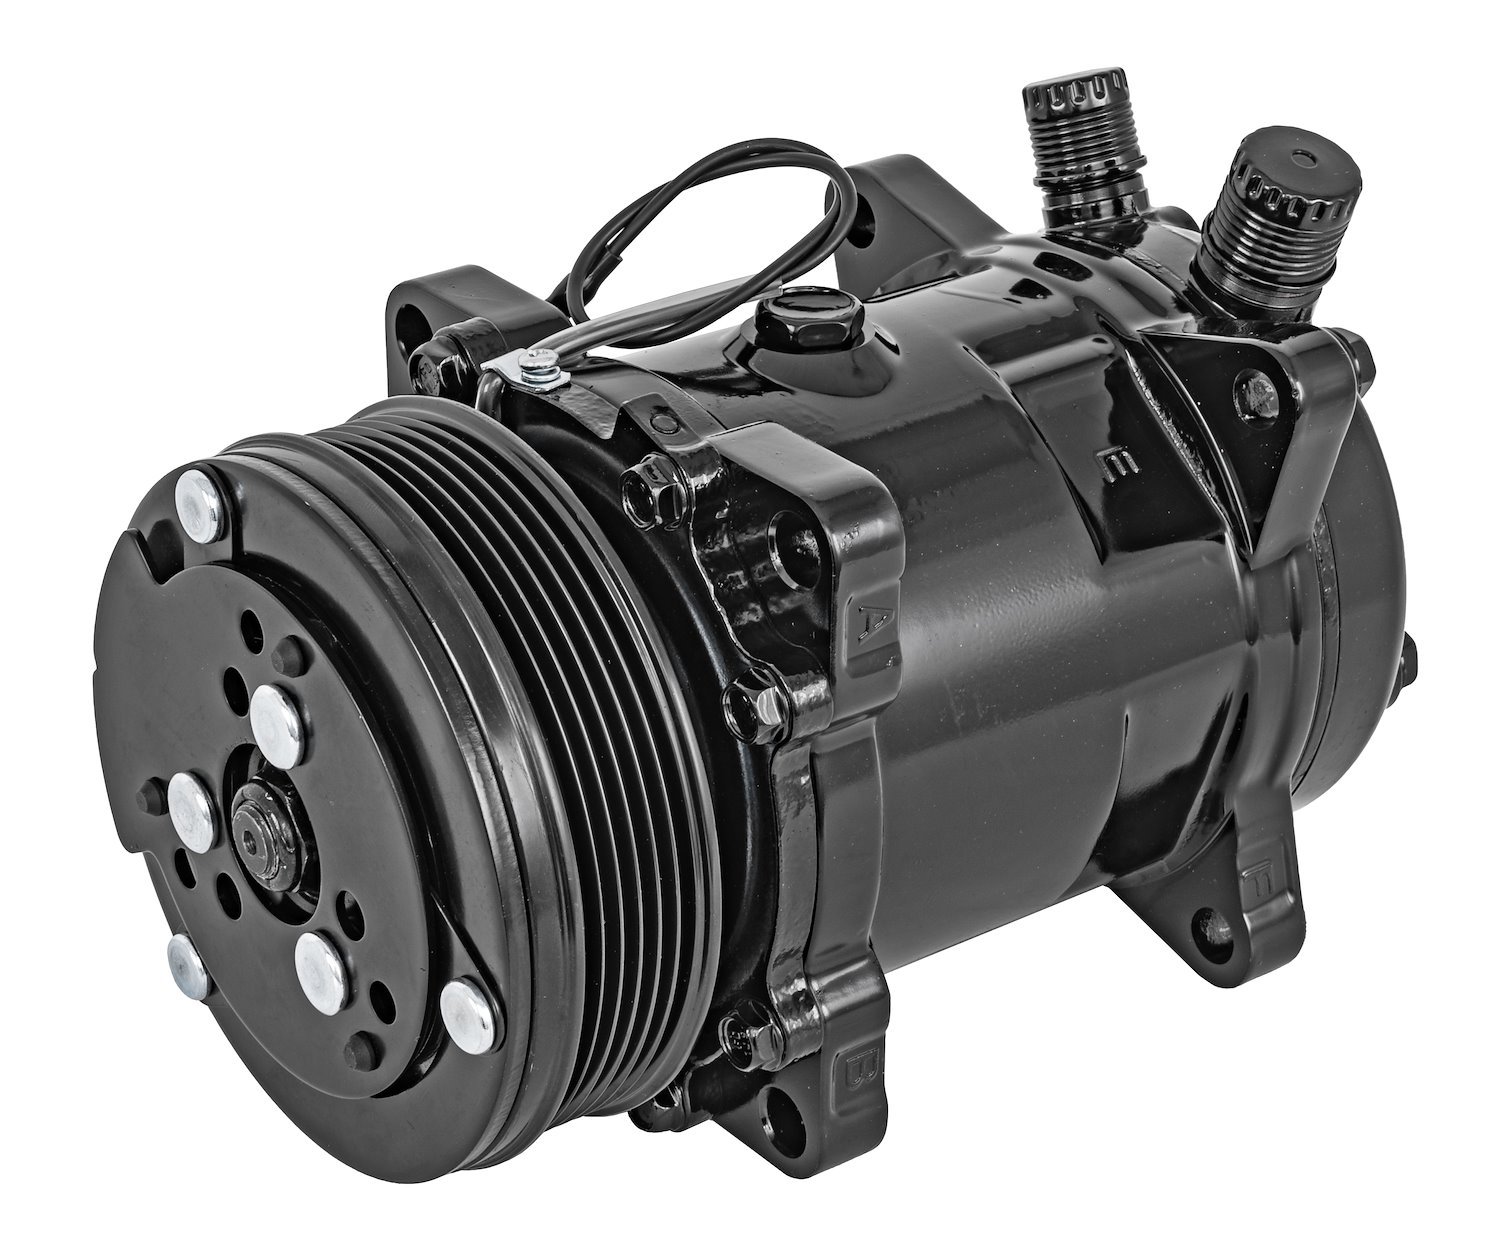 SD508 Air Conditioner Compressor w/6-Groove Serpentine Pulley [Black Finish]